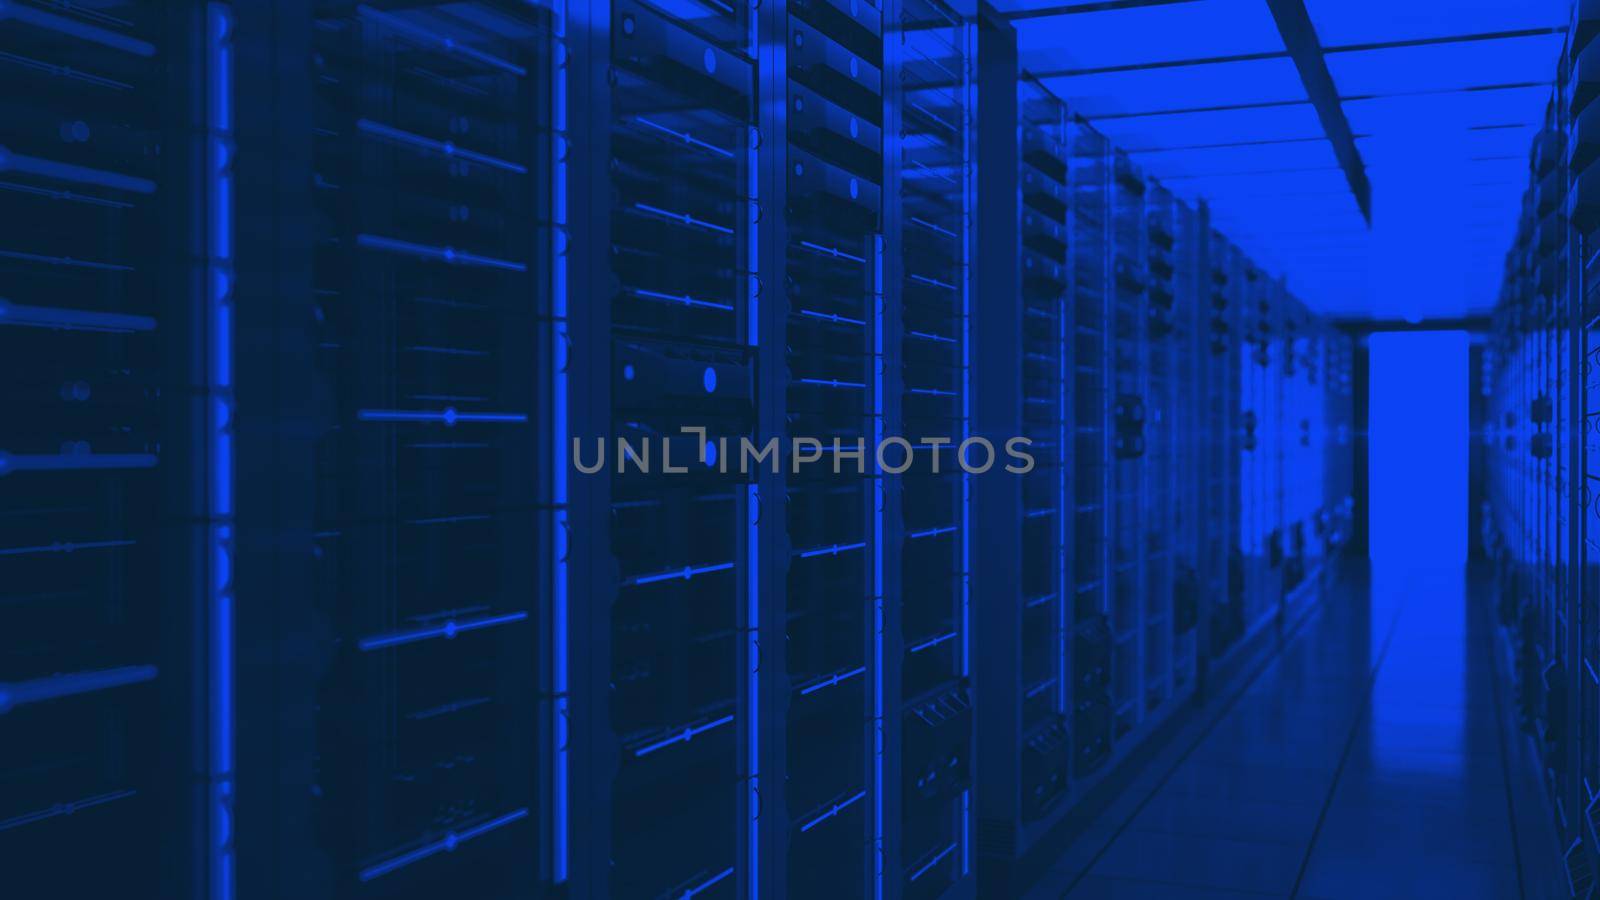 Server racks in computer network security server room data center. 3D render dark blue